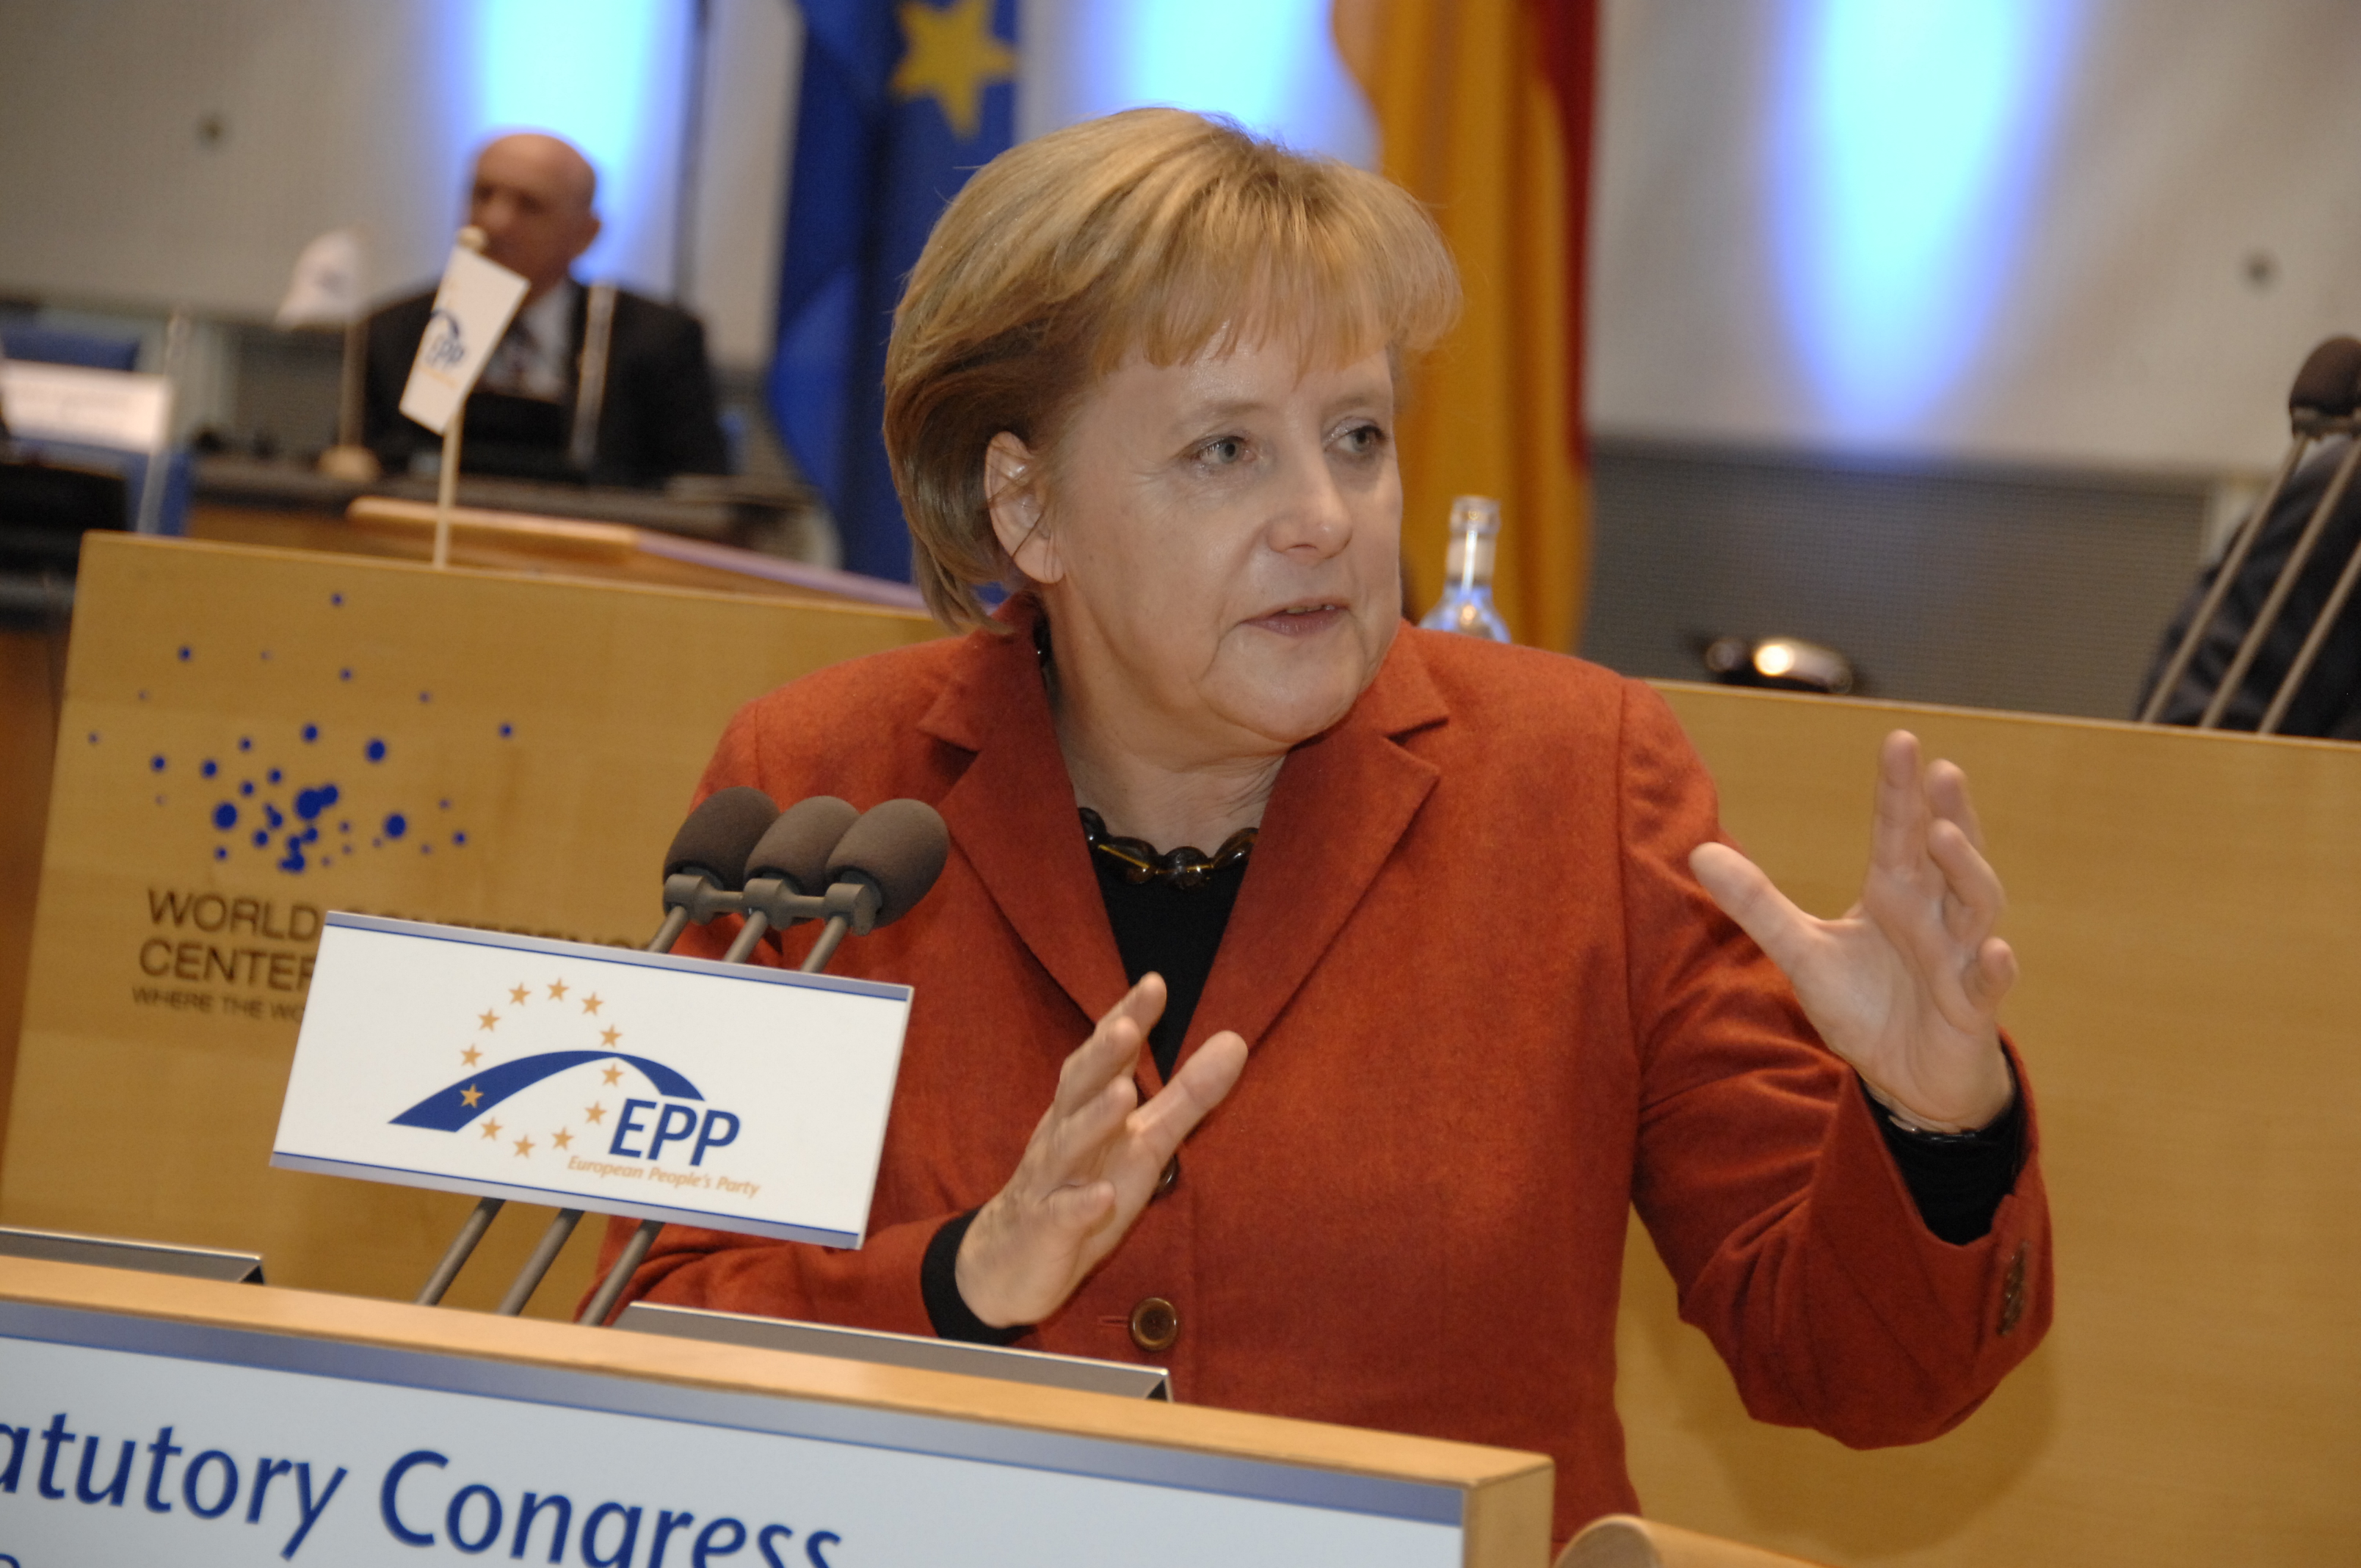 https://upload.wikimedia.org/wikipedia/commons/7/79/Angela_Merkel_EPP.jpg